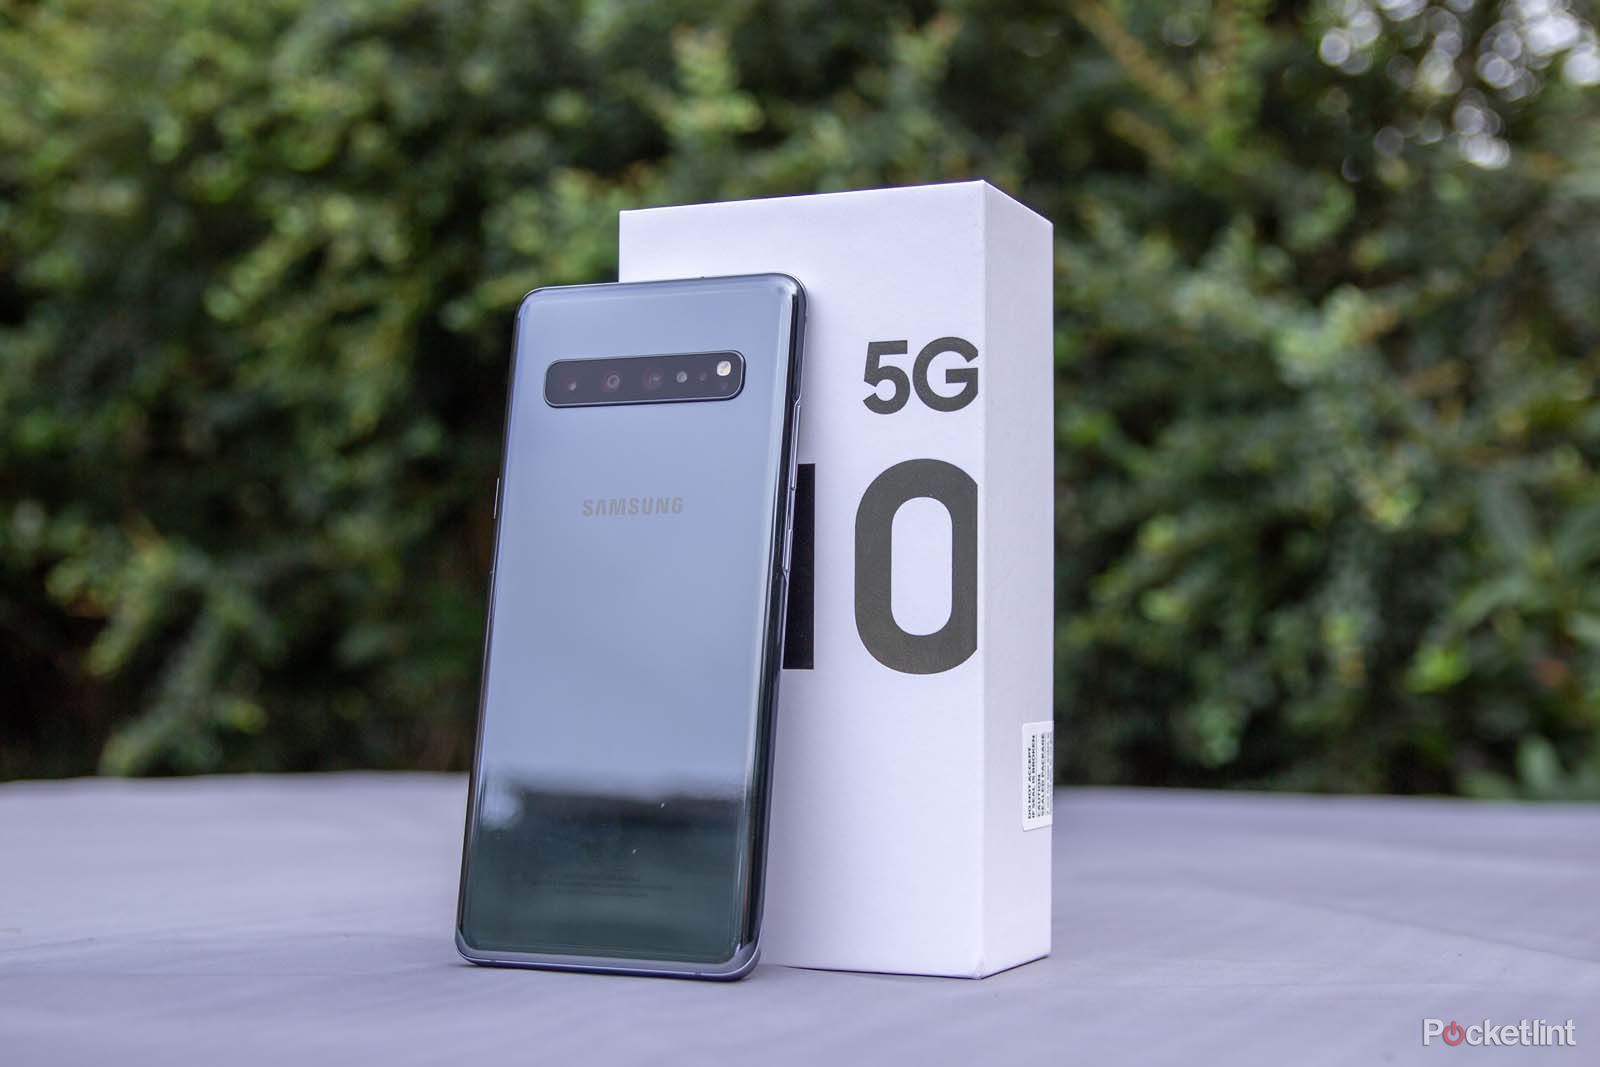 Samsung Galaxy S10 5G image 1